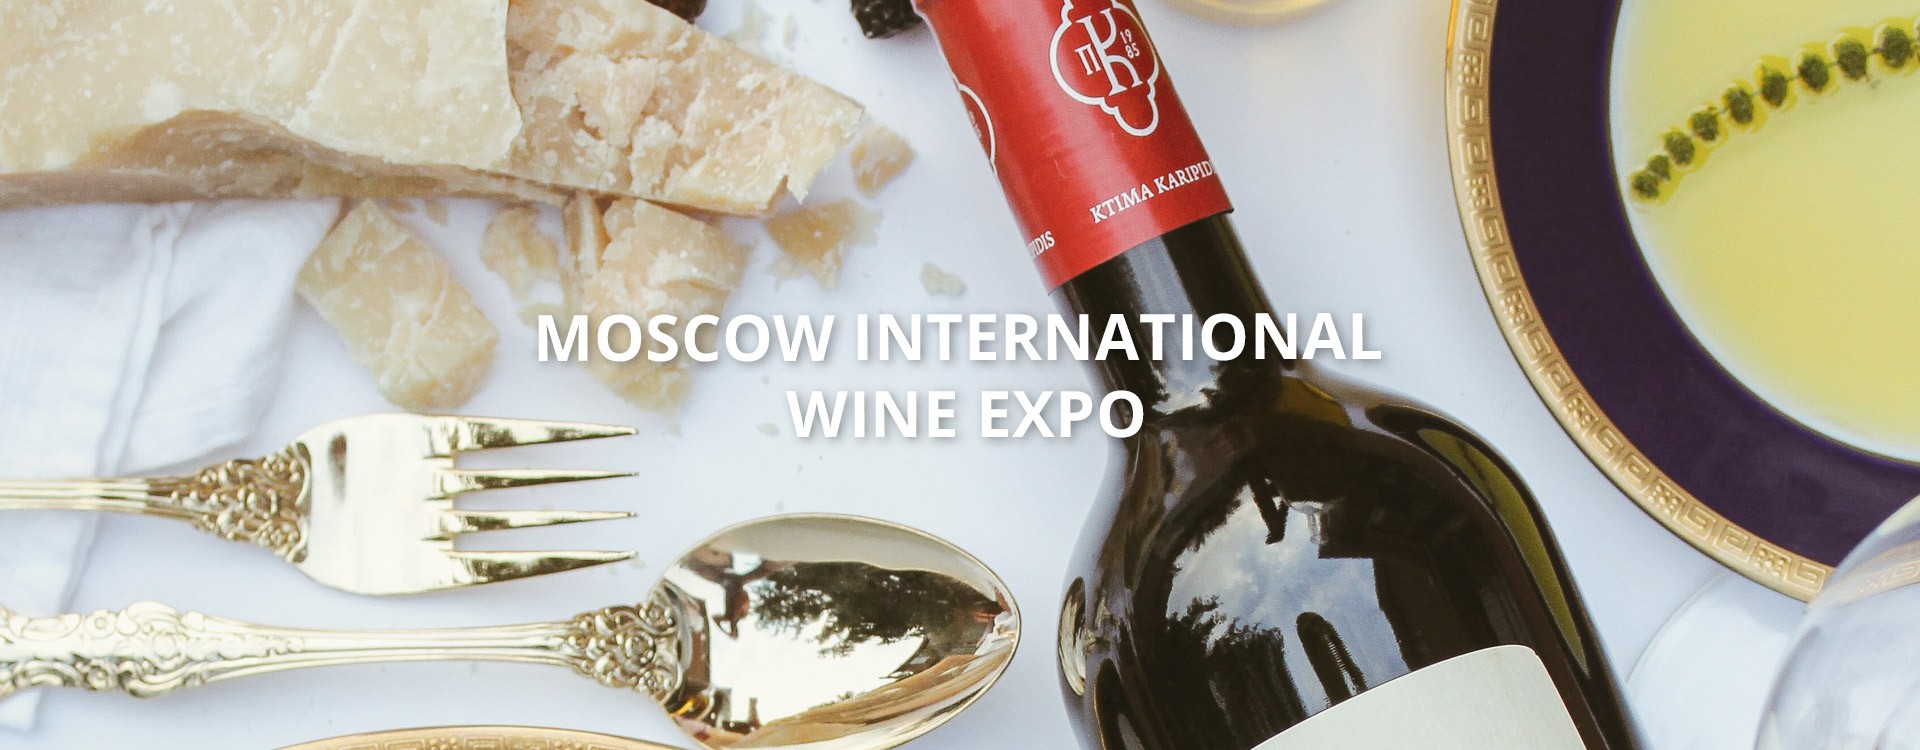 Moscow International Wine Expo